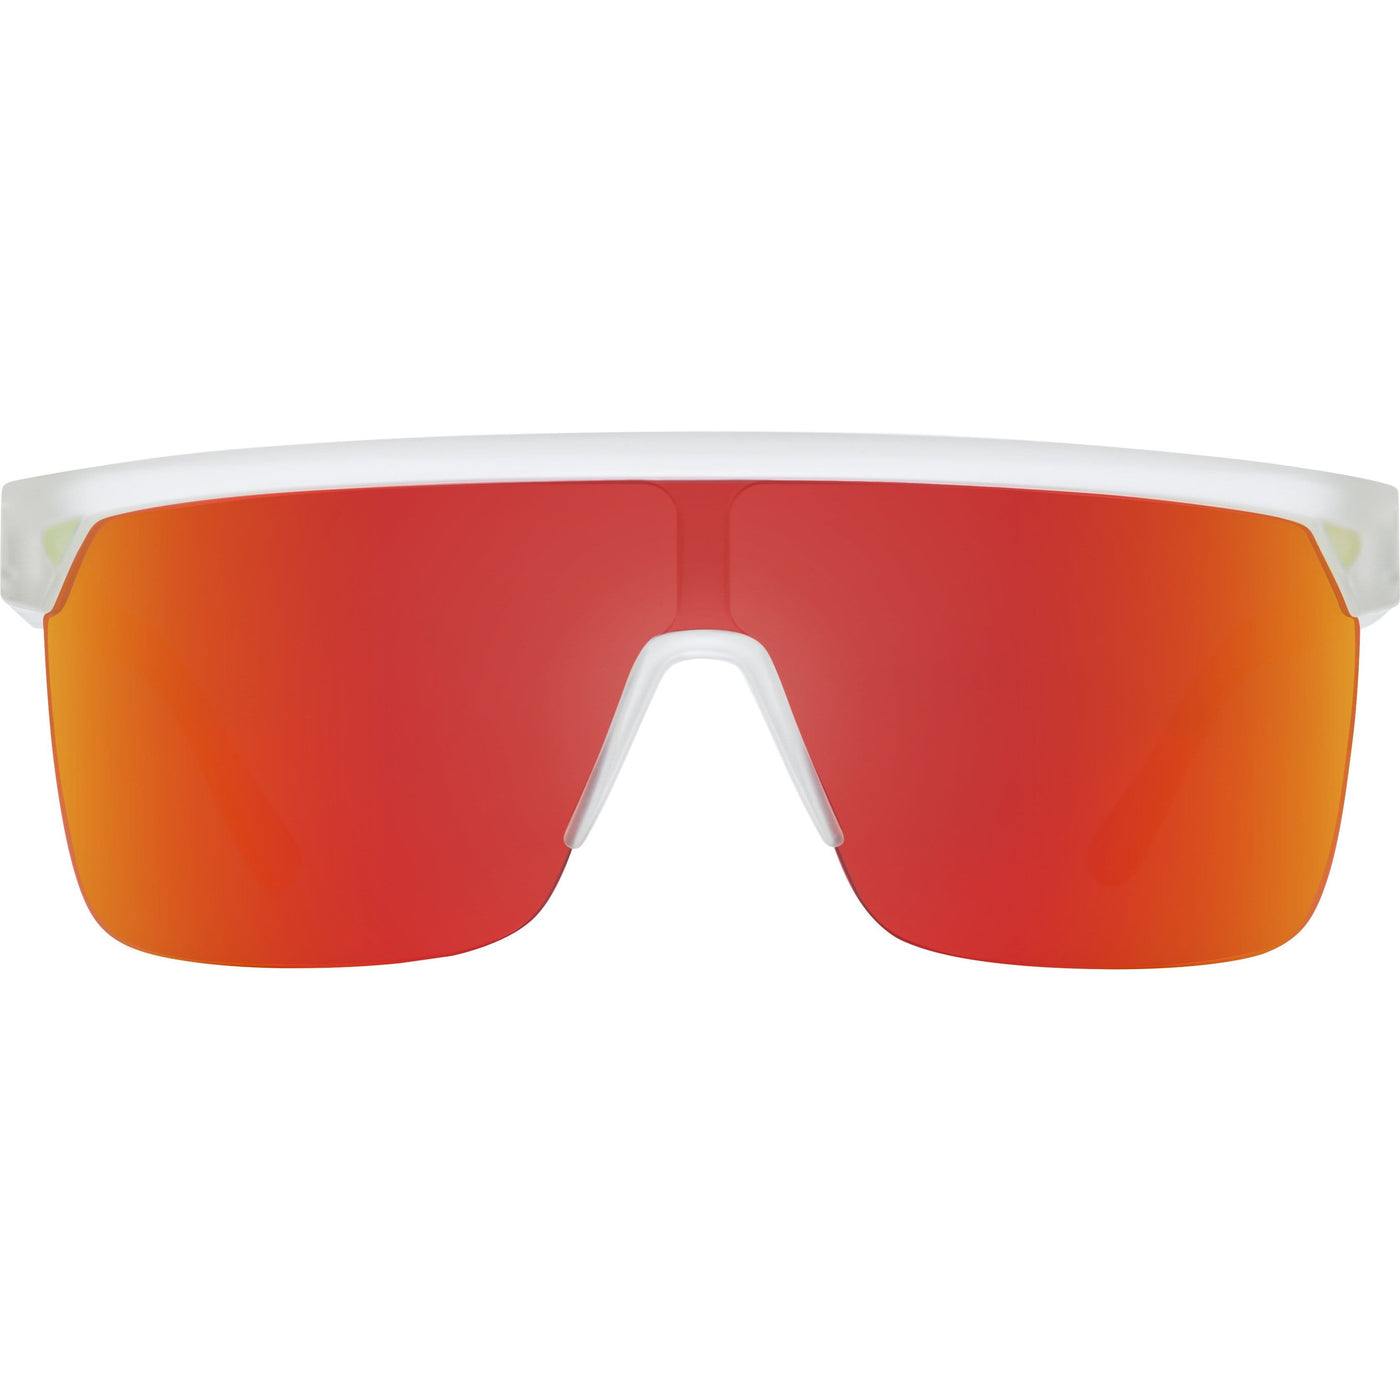 red mirrored oversize semi-rimless sunglasses 